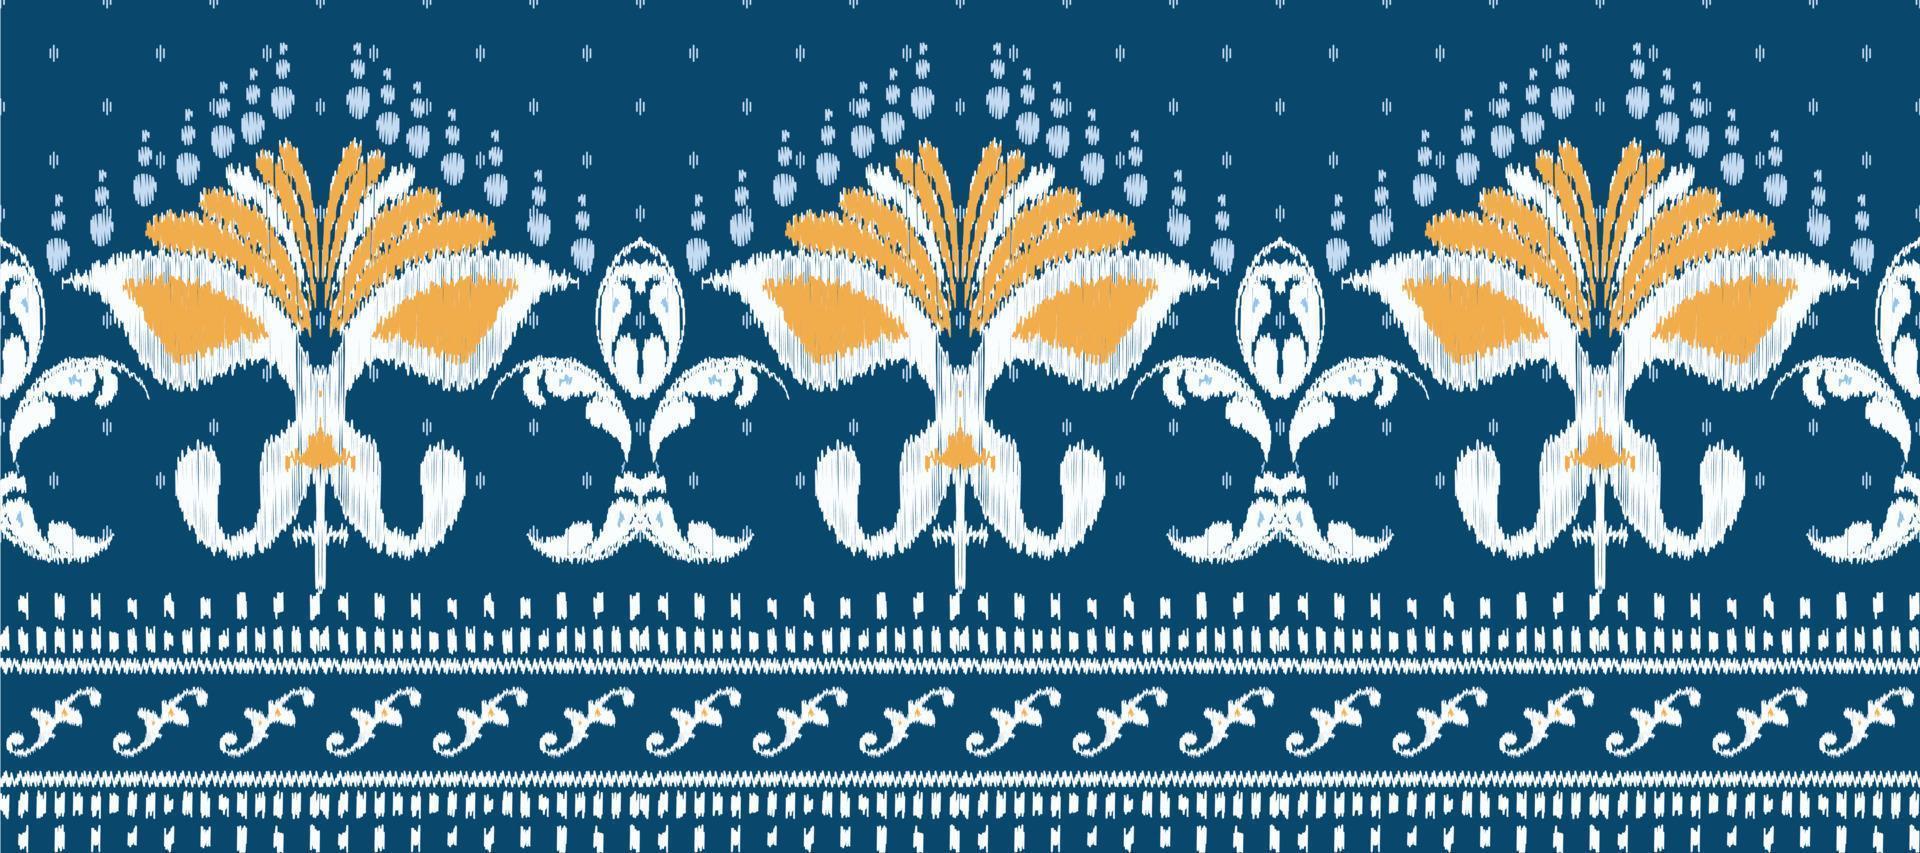 africano ikat cachemir bordado. batik textil ikat floral sin costura modelo digital vector diseño para impresión sari curti borneo tela frontera ikkat dupatta